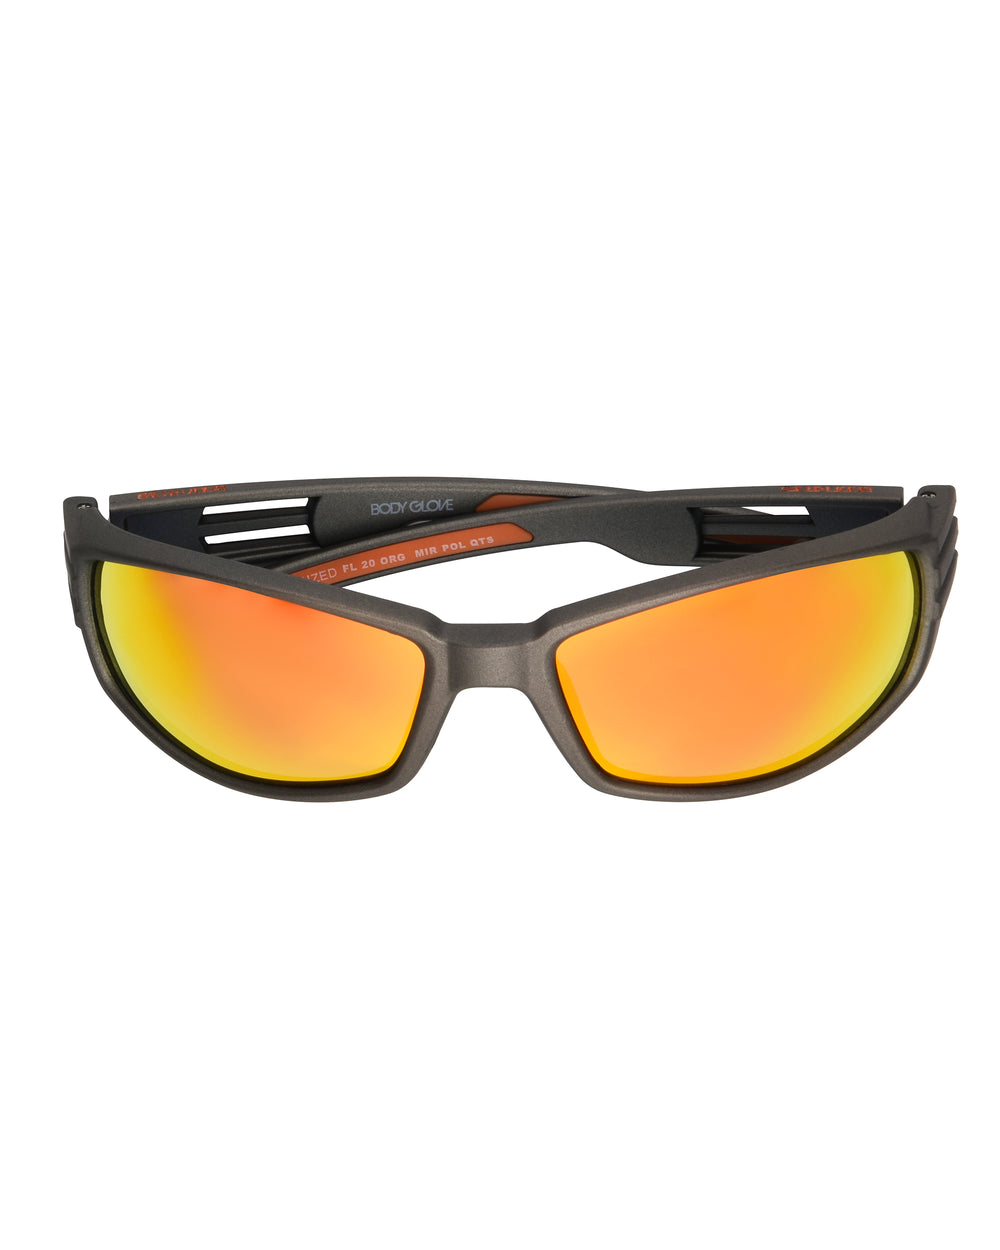 Breakers Polarized Sunglasses - Grey